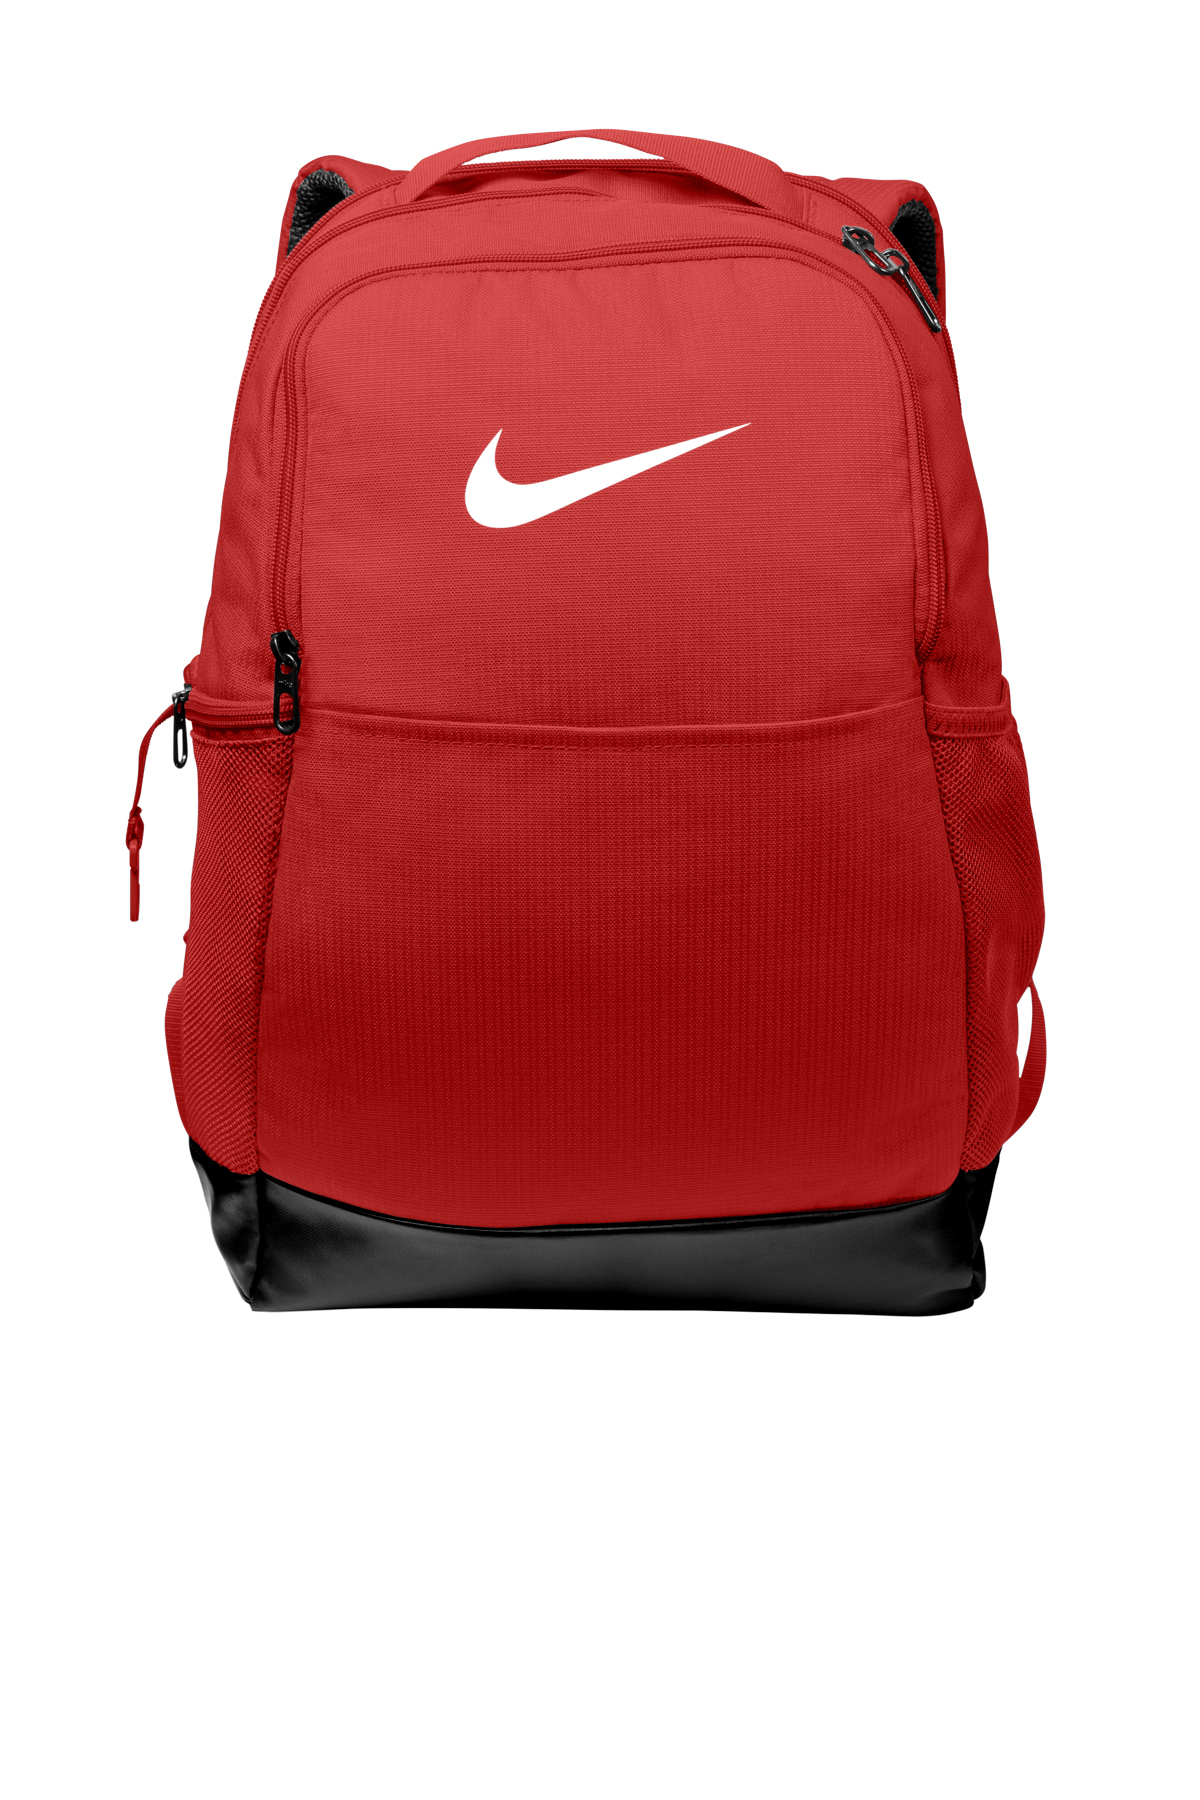 Nike Brasilia Medium Backpack, Black, Medium : : Clothing